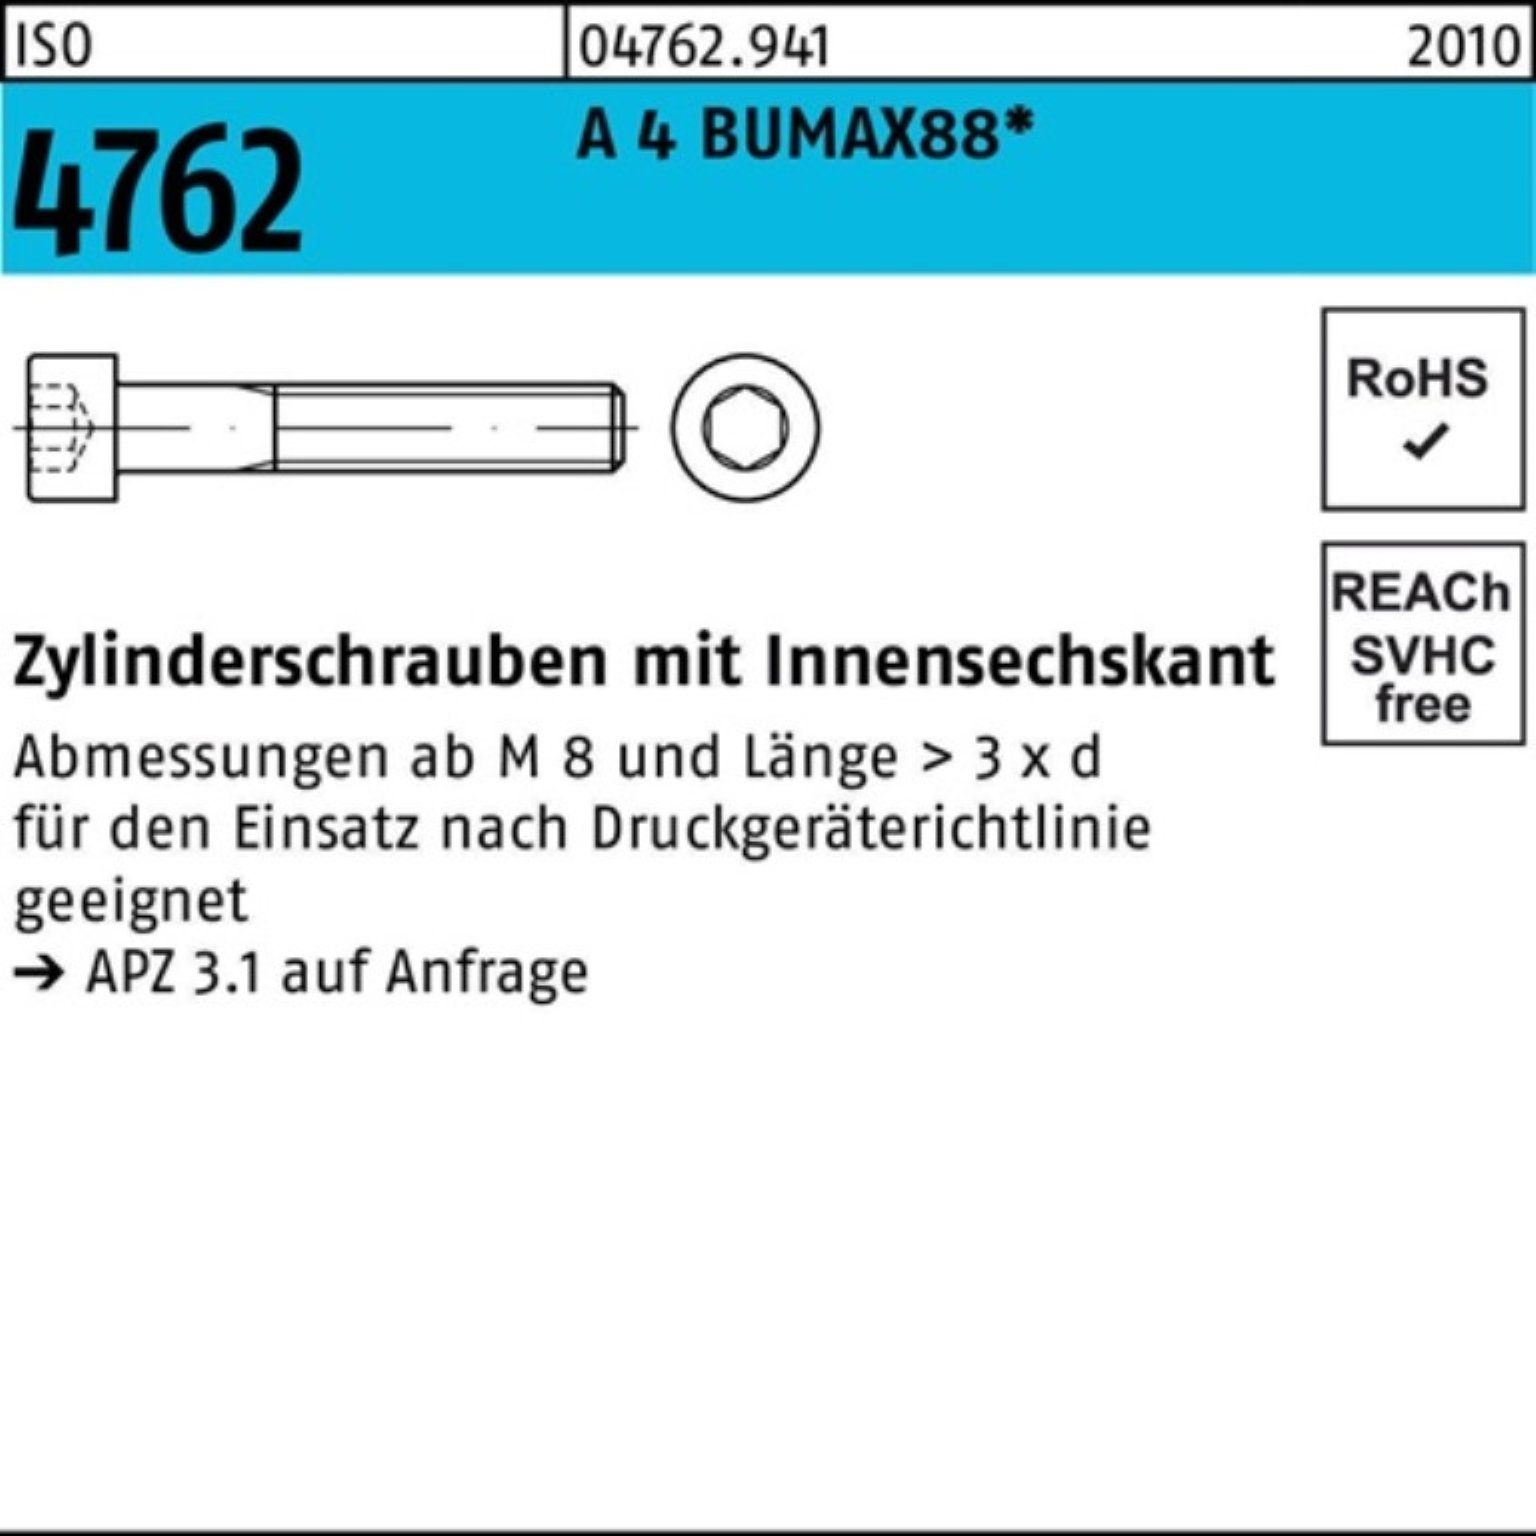 Zylinderschraube Zylinderschraube ISO 4 A 100er BUMAX88 M6x Bufab Innen-6kt 100 50 Pack 4762